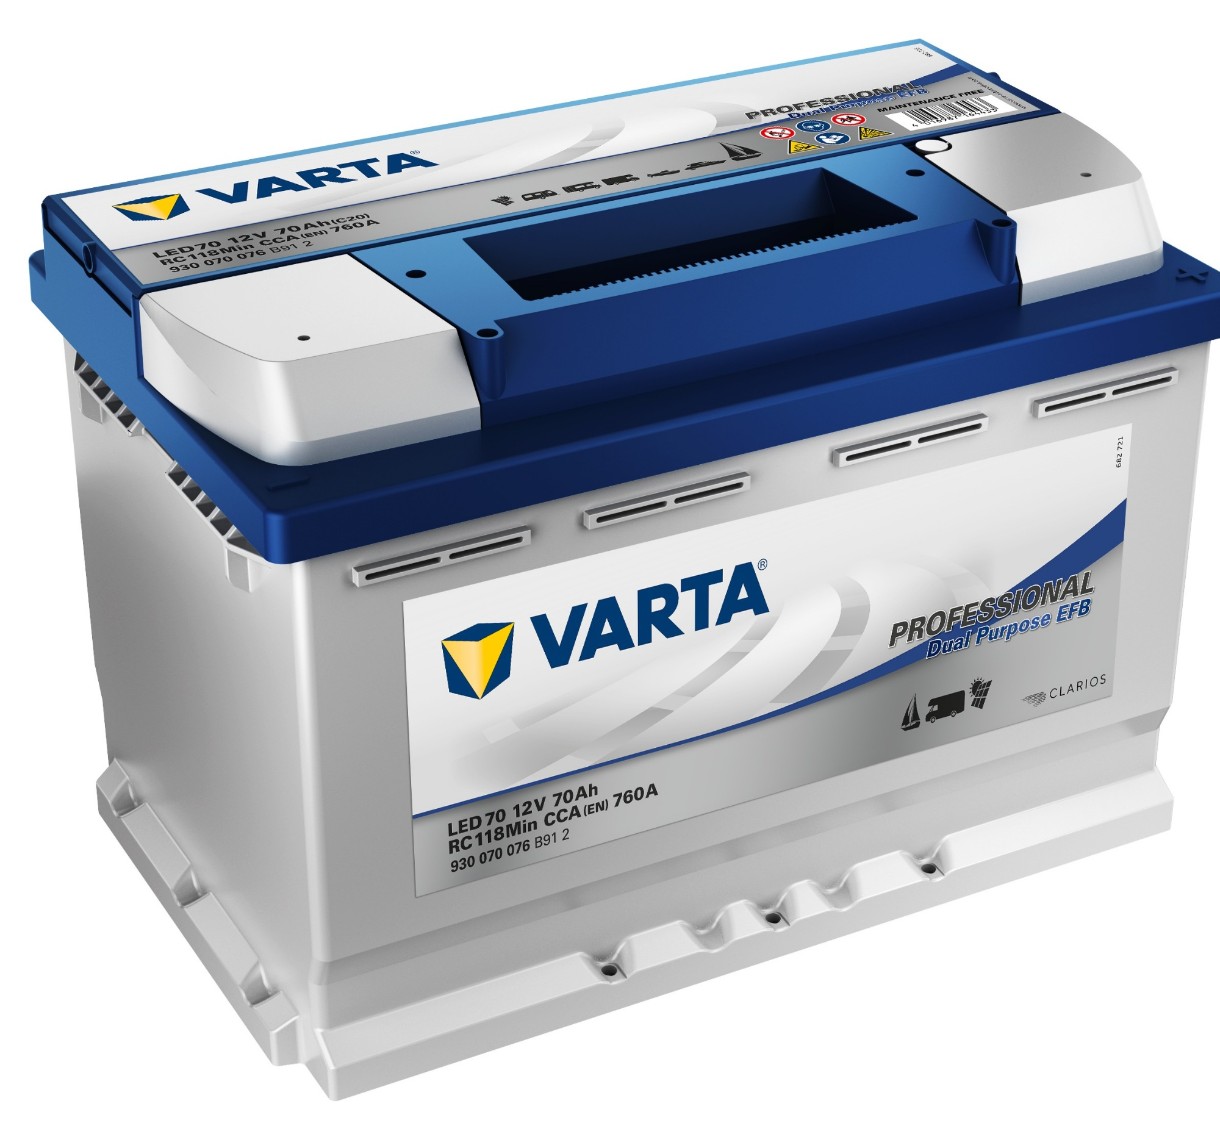 Acumulatoar auto Varta Professional Dual Purpose EFB LED70 12V 70Ah (930 070 076 B912)